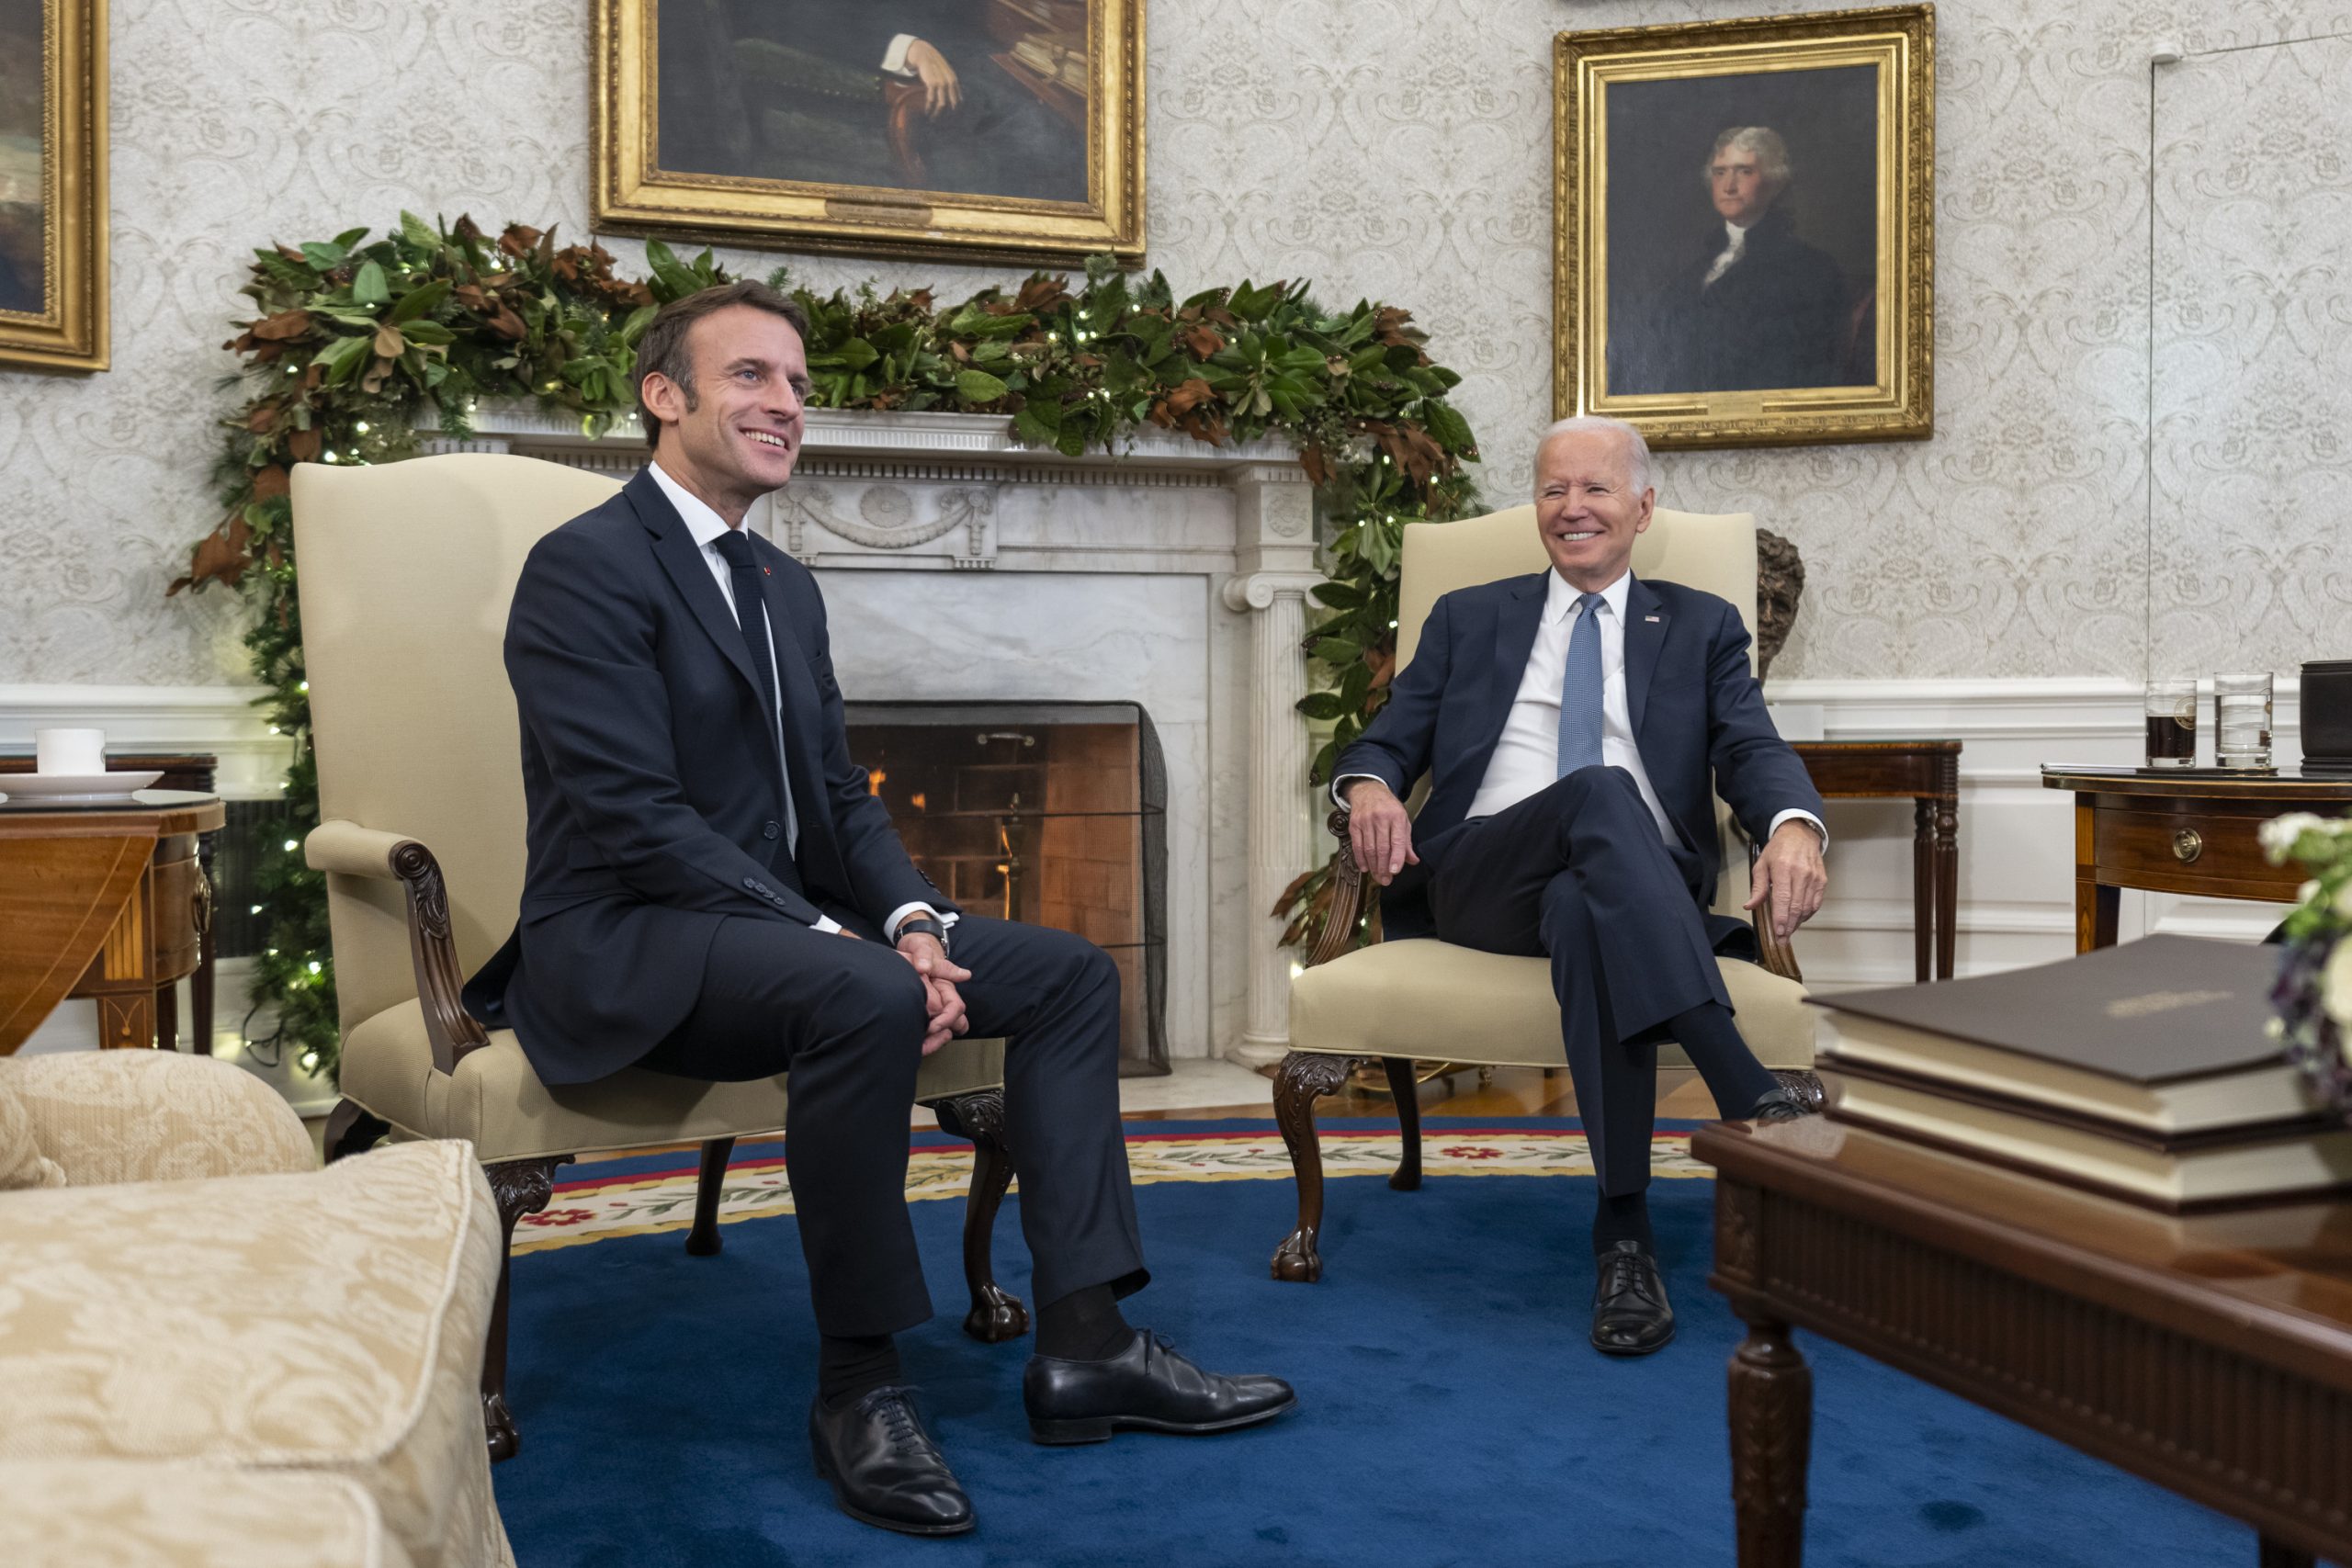 Photo: US President Joe Biden and French President Emmanuel Macron meet at the White House in Washington DC. Credit: @POTUS https://twitter.com/POTUS/status/1598504733056155648